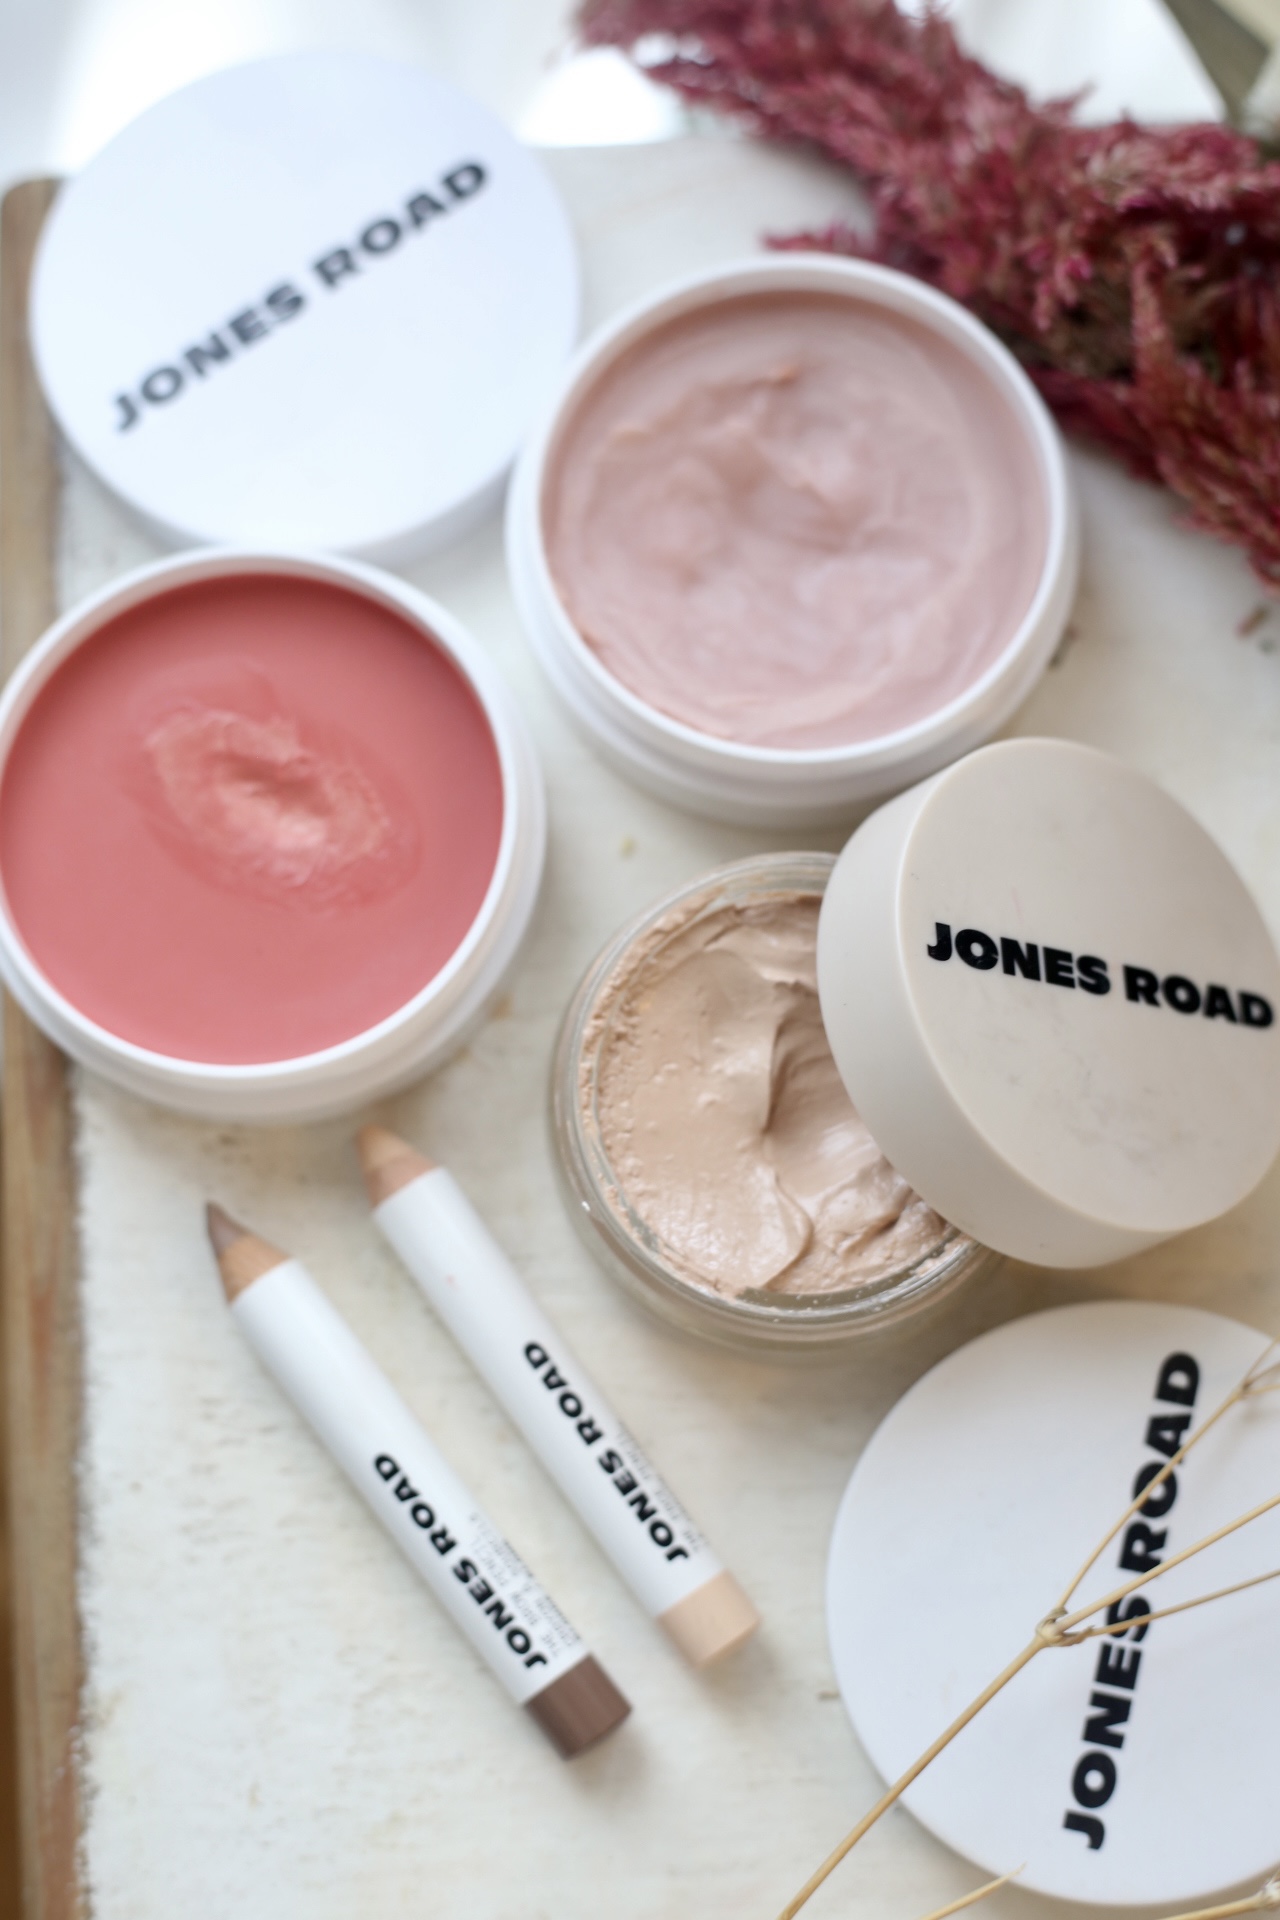 Jones Road Beauty Review: Is Bobbi New Makeup Line It? - Organic Lover